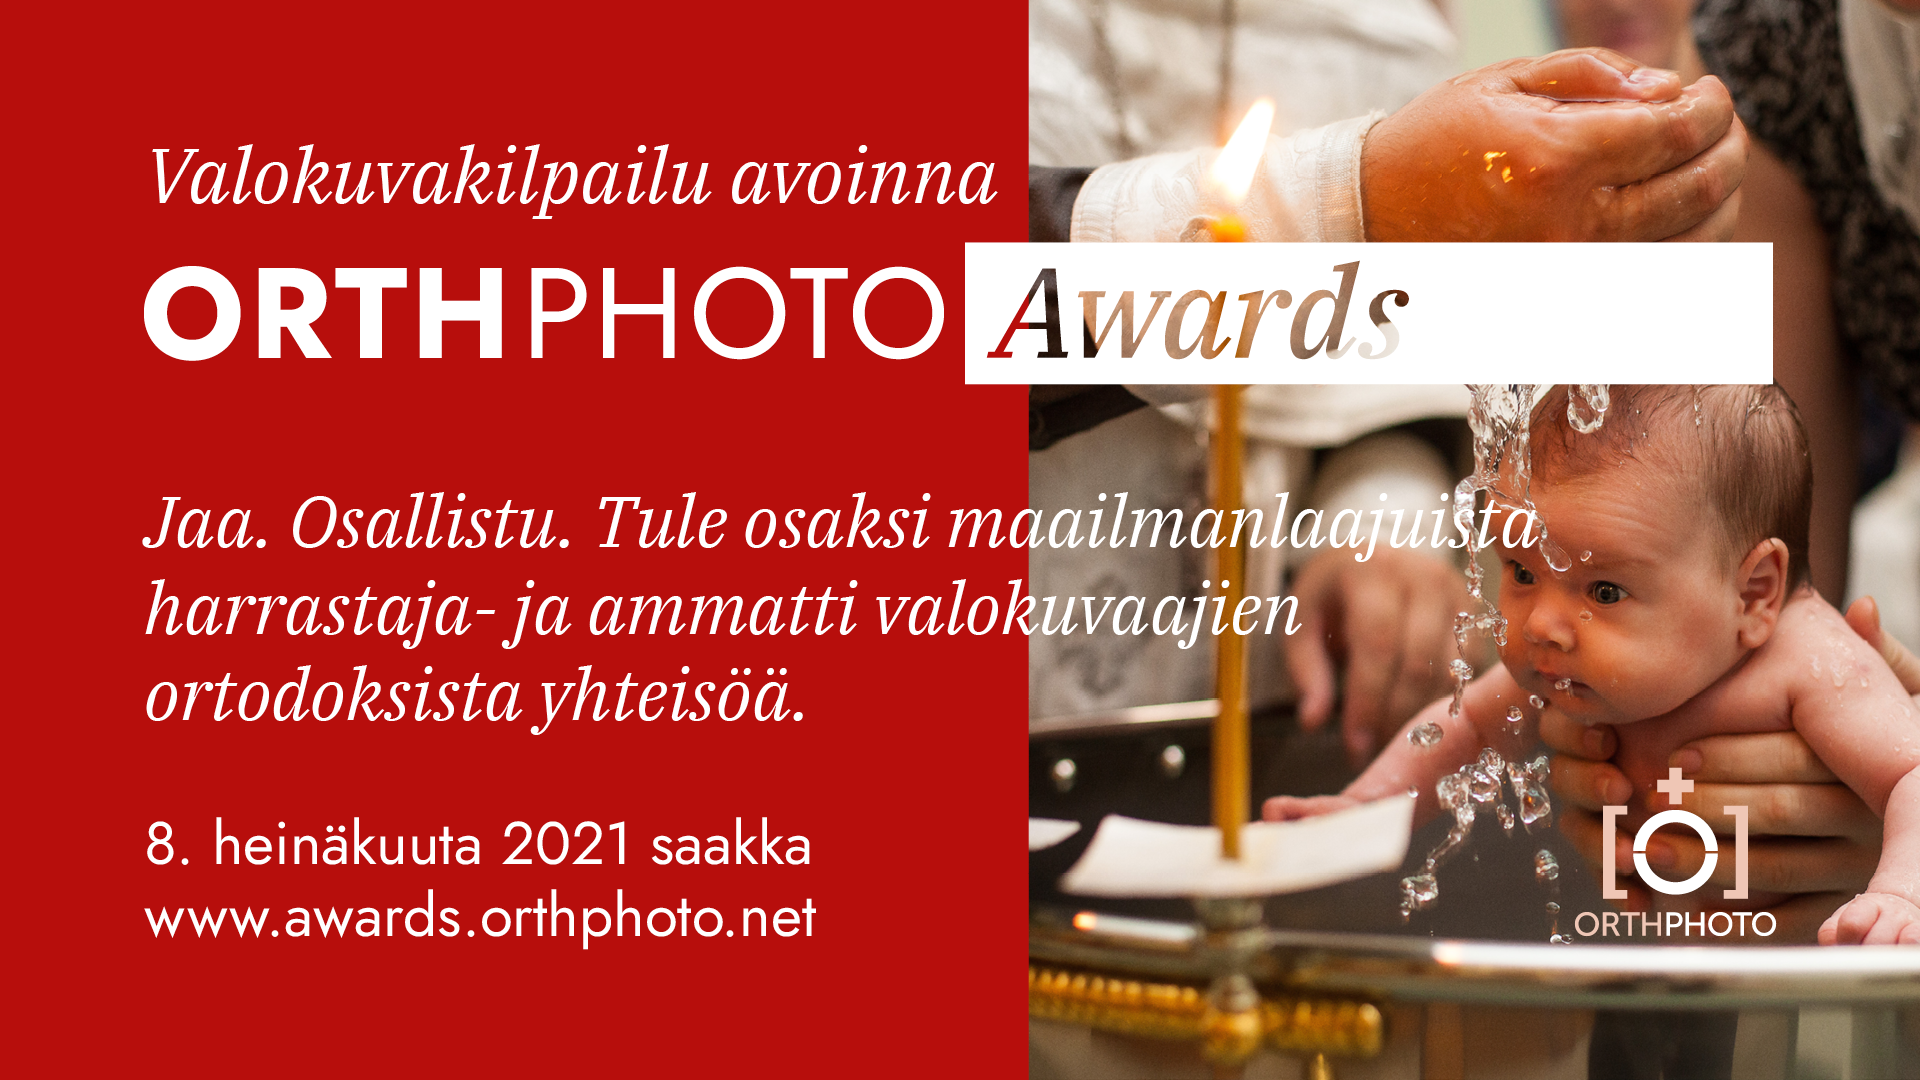 OrthPhoto Awards